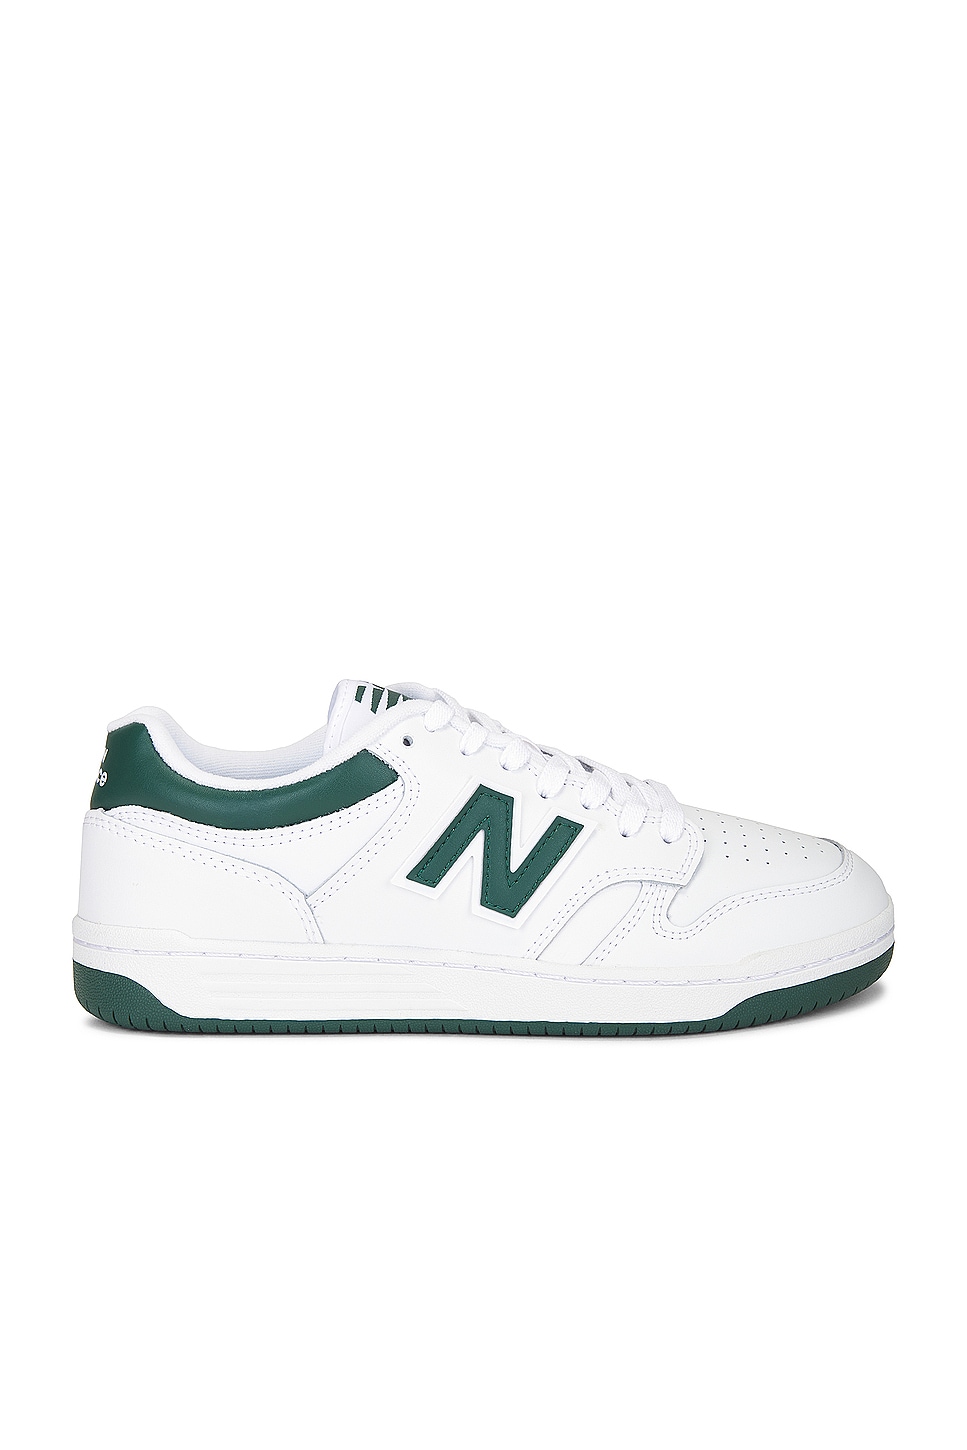 Image 1 of New Balance Bb480 in White, Nightwatch Green, & Light Aluminum